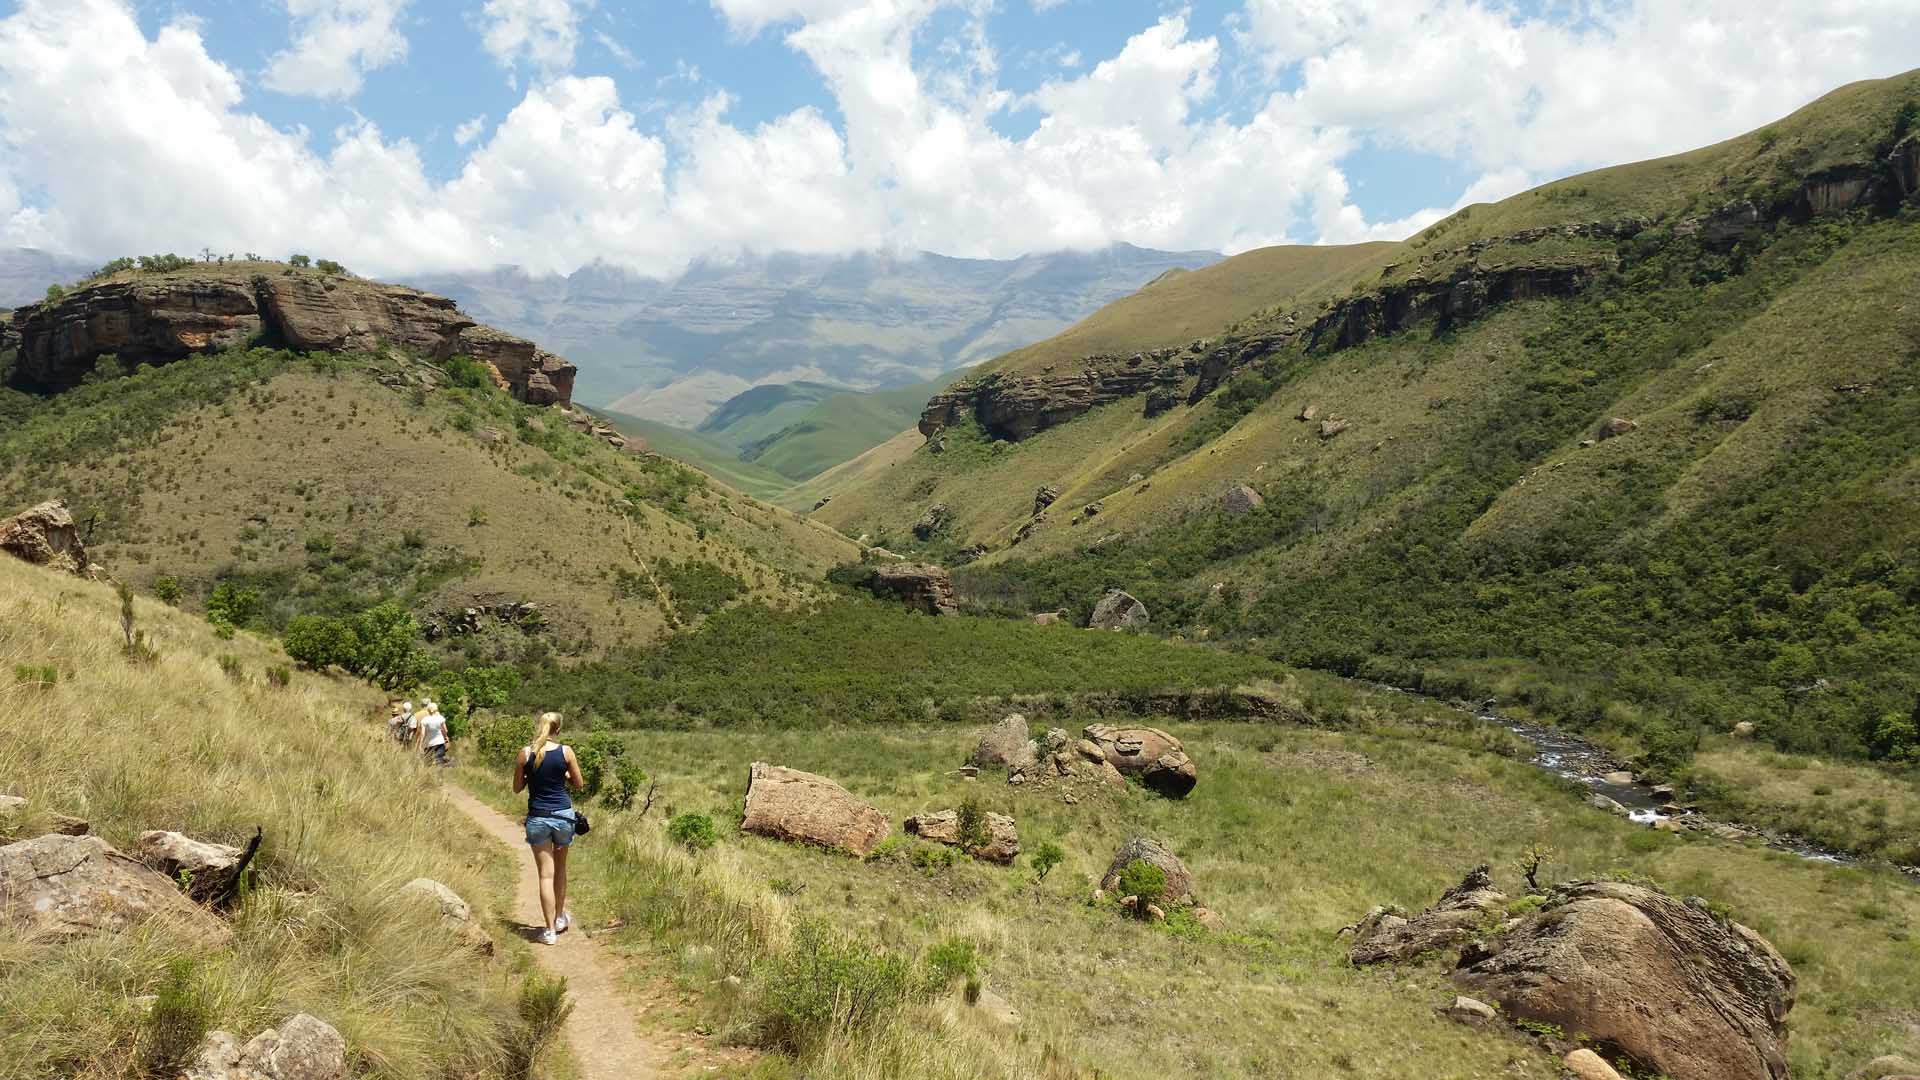 Hiking in the Drakensberg